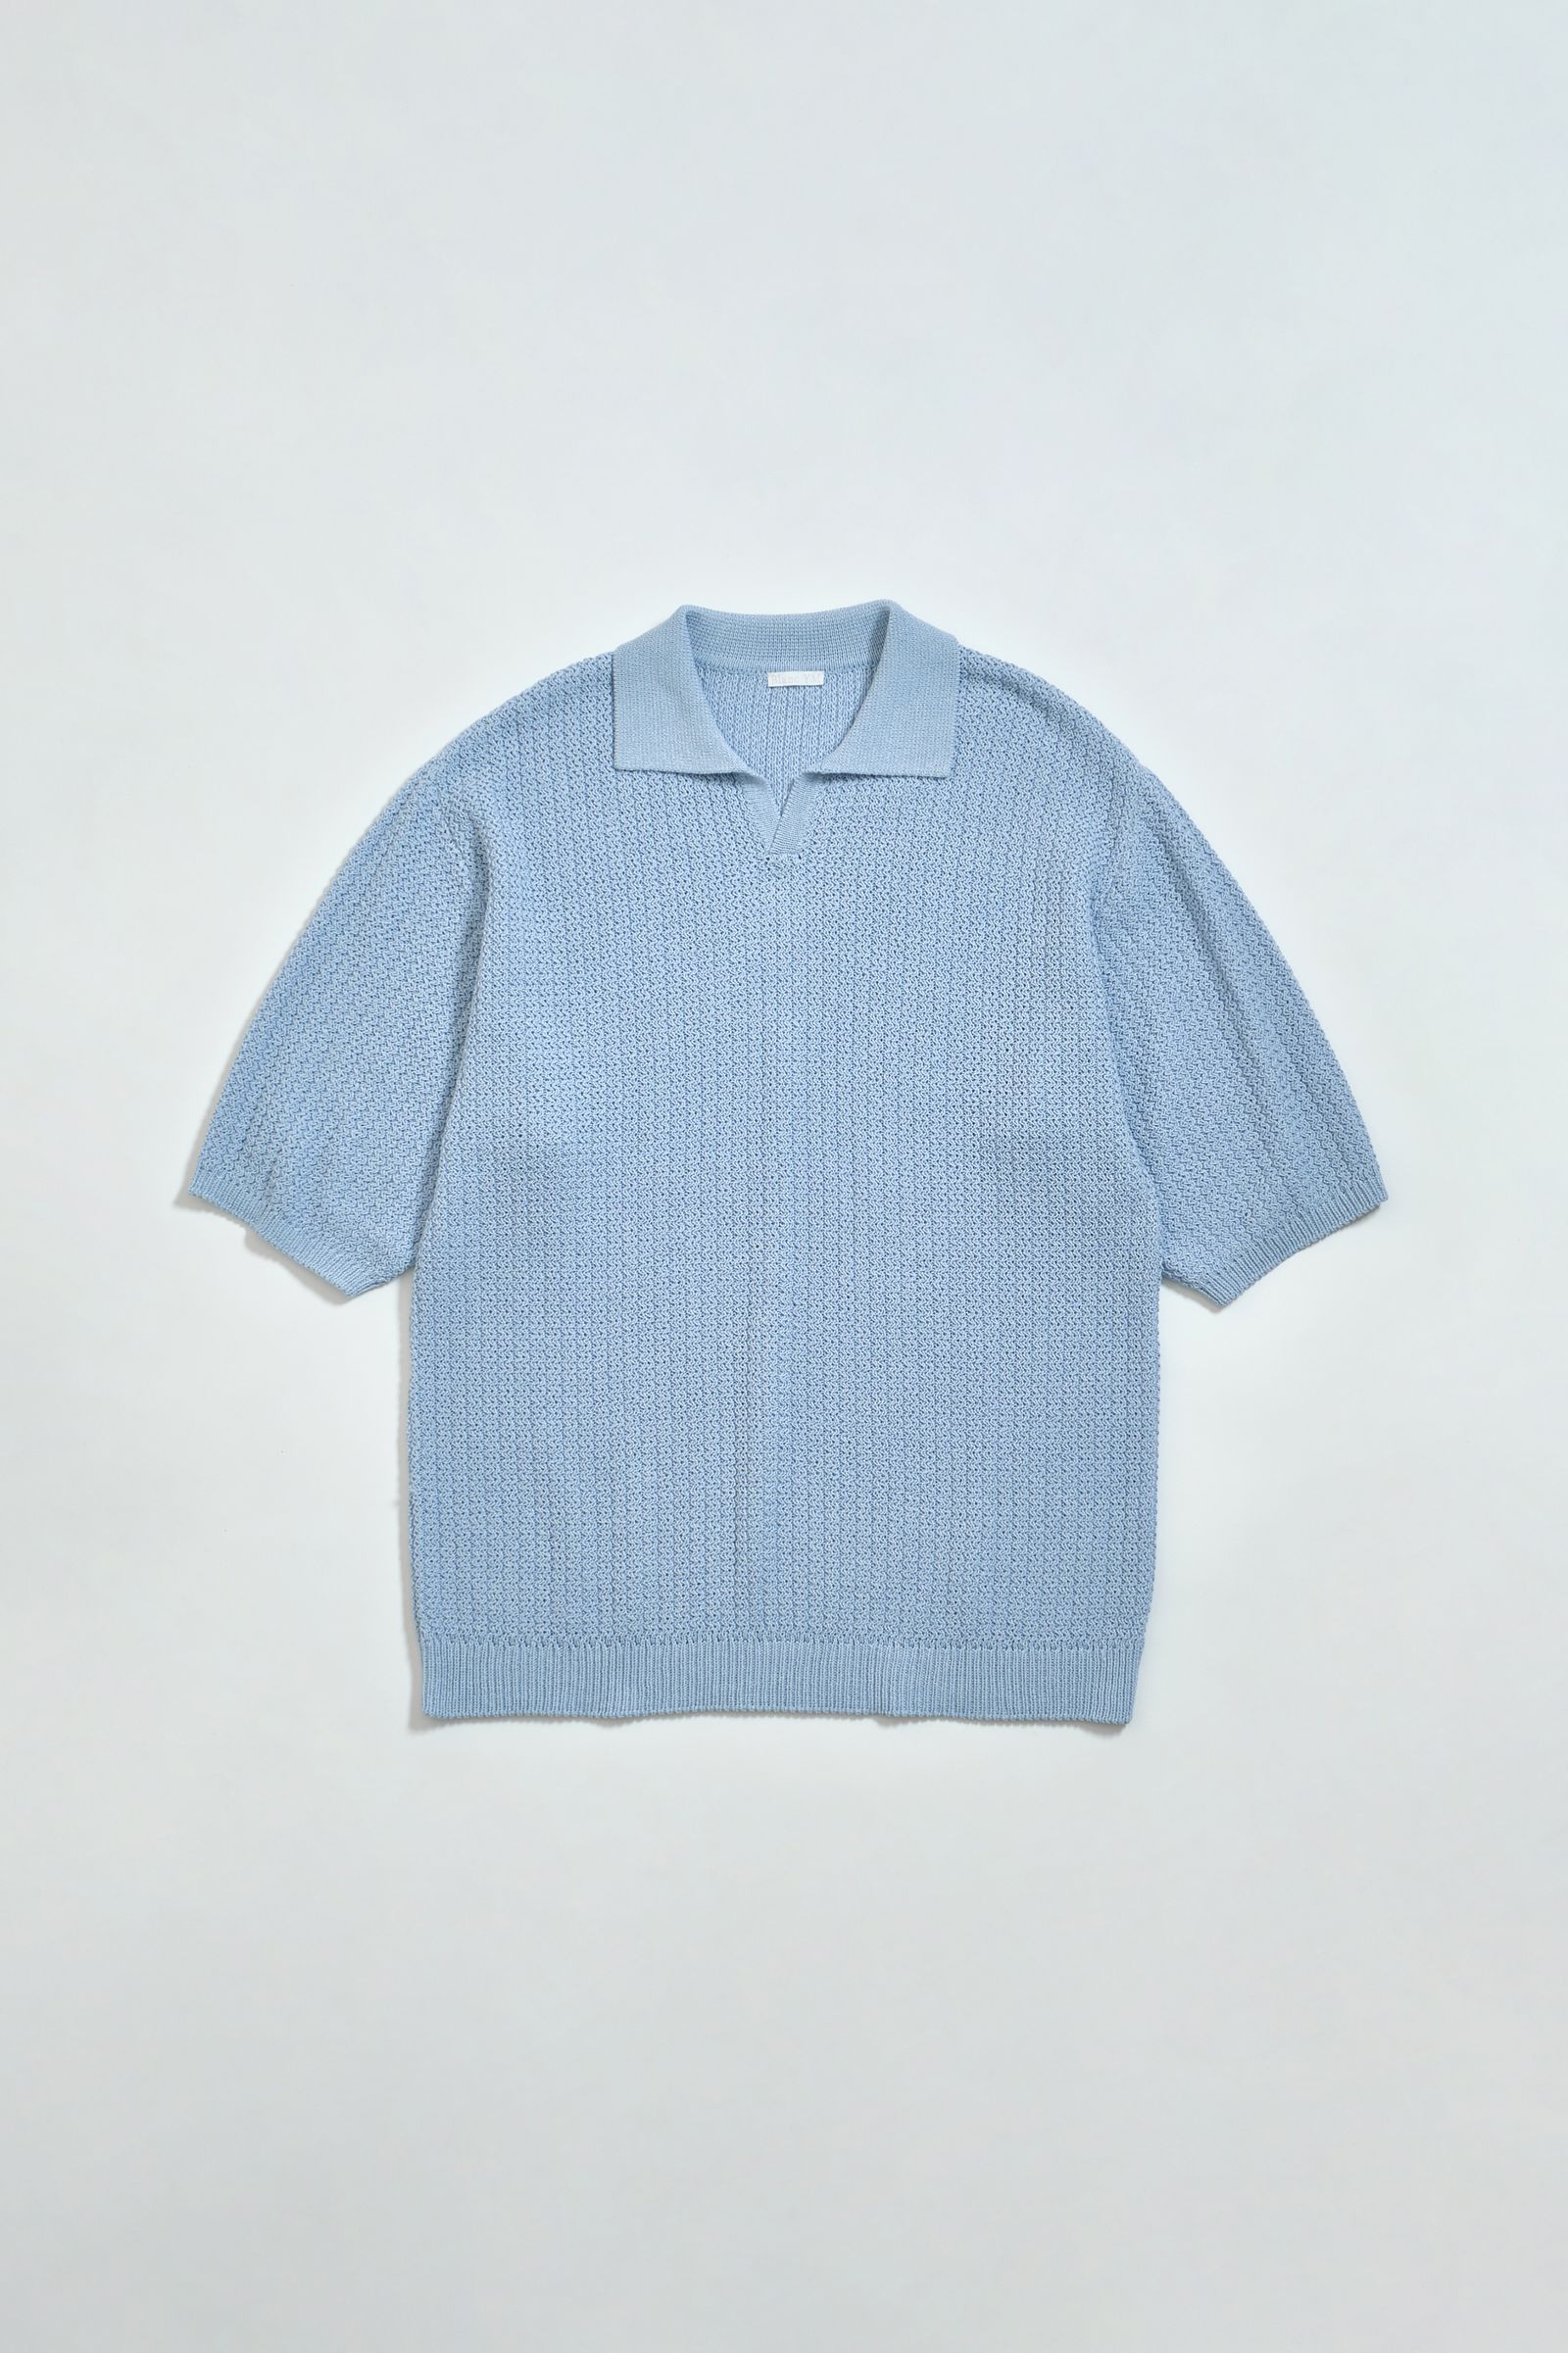 Skipper knit Shirt SAX BLUE / スキッパー / ニットシャツ / コットン / 和紙素材 - S